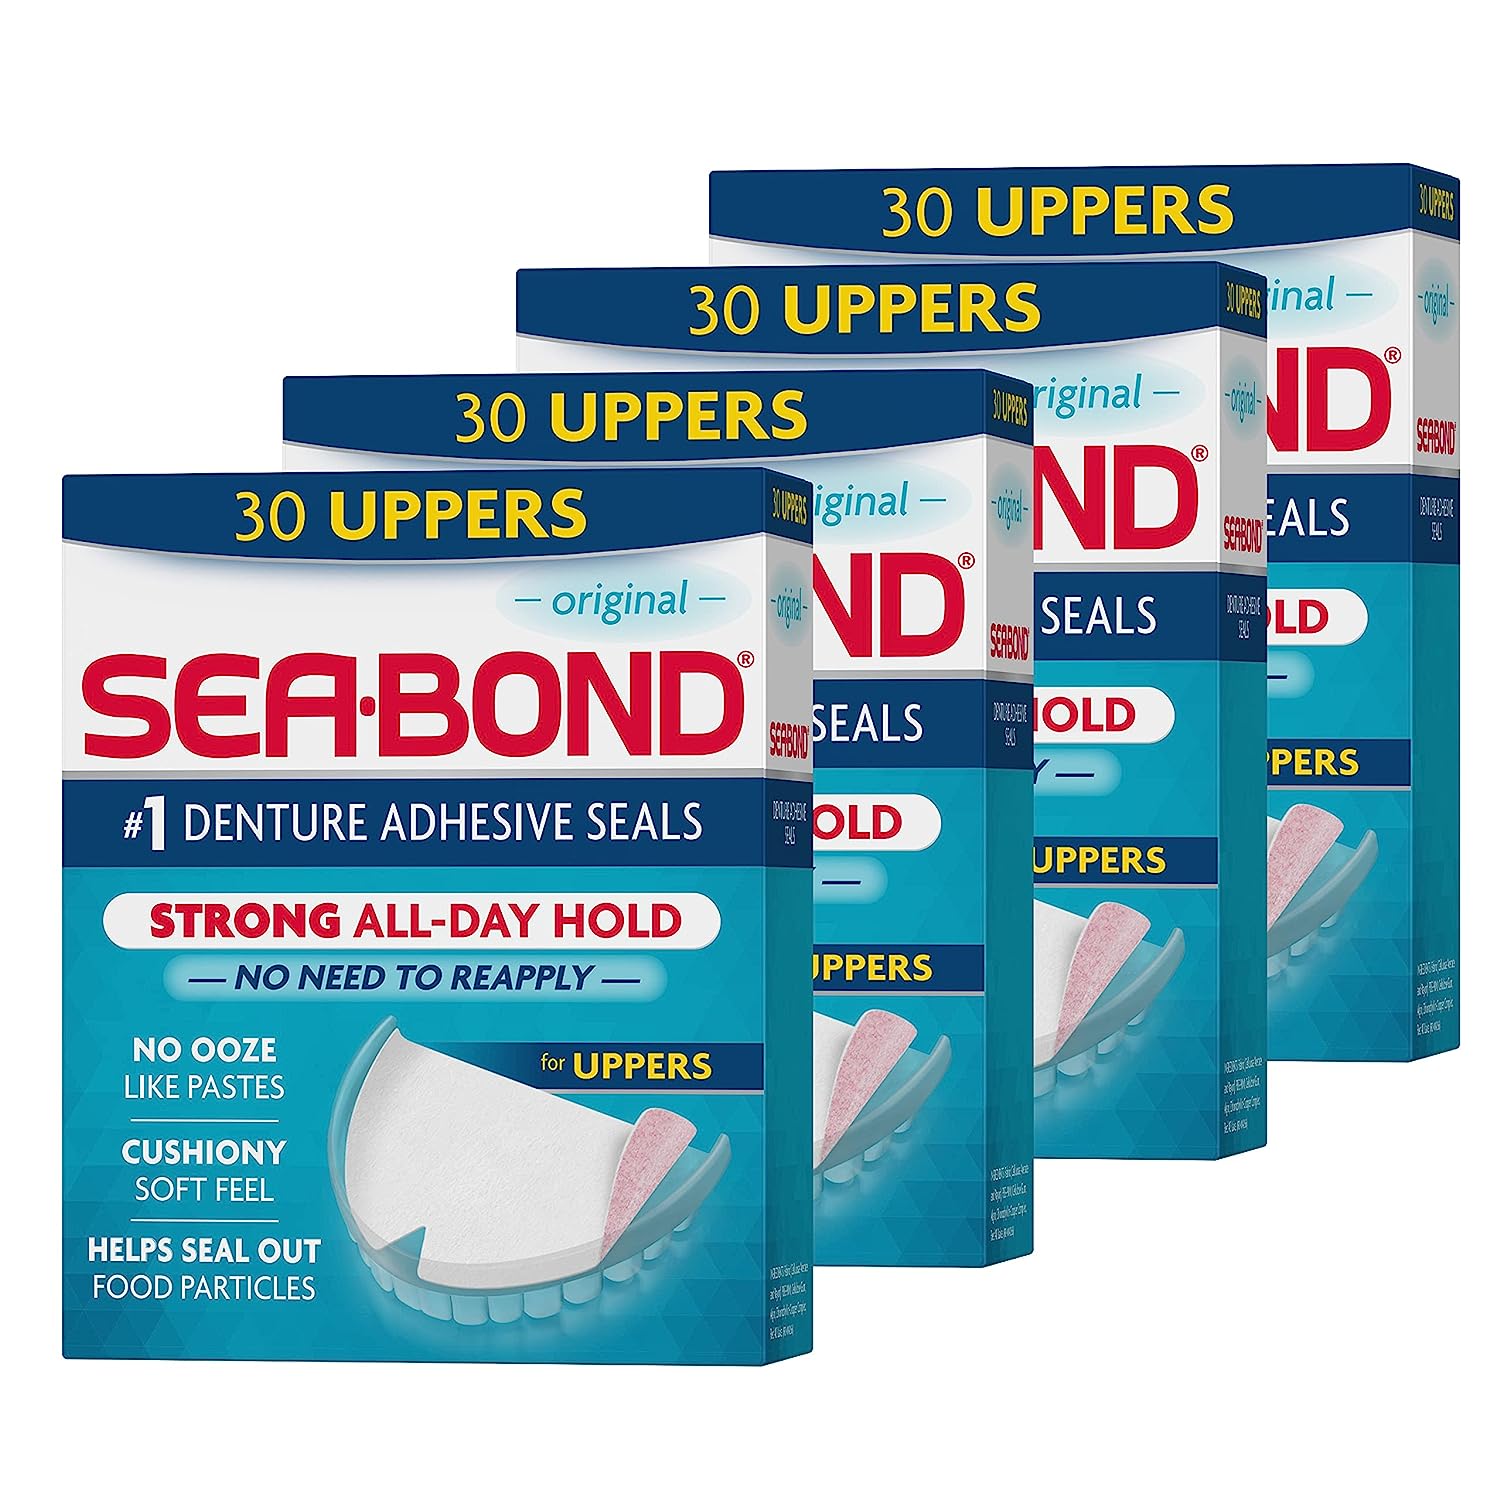 Sea-Bond Secure Denture Adhesive Seals, Original [...]